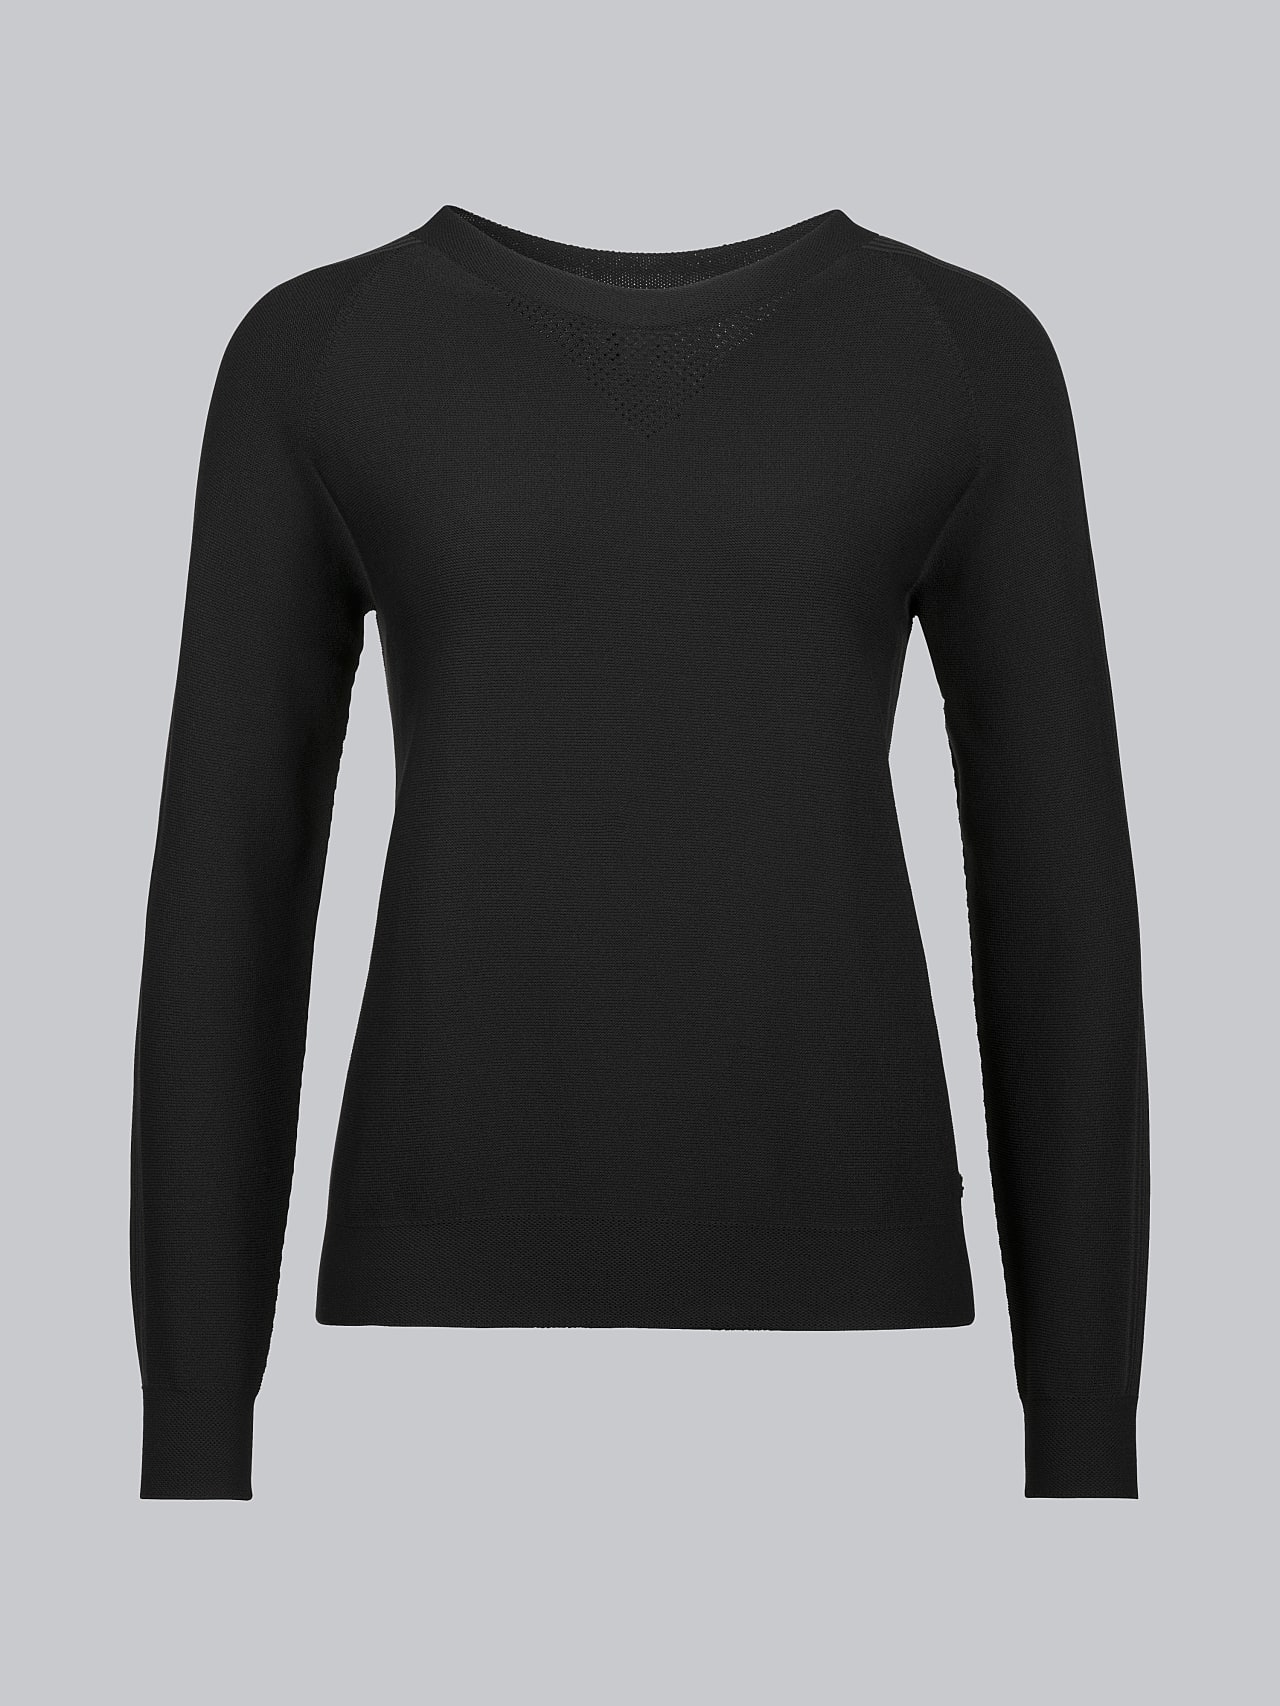 AlphaTauri | FINTEW V2.Y4.01 | 3D Performance Knit Sweater in black for Women